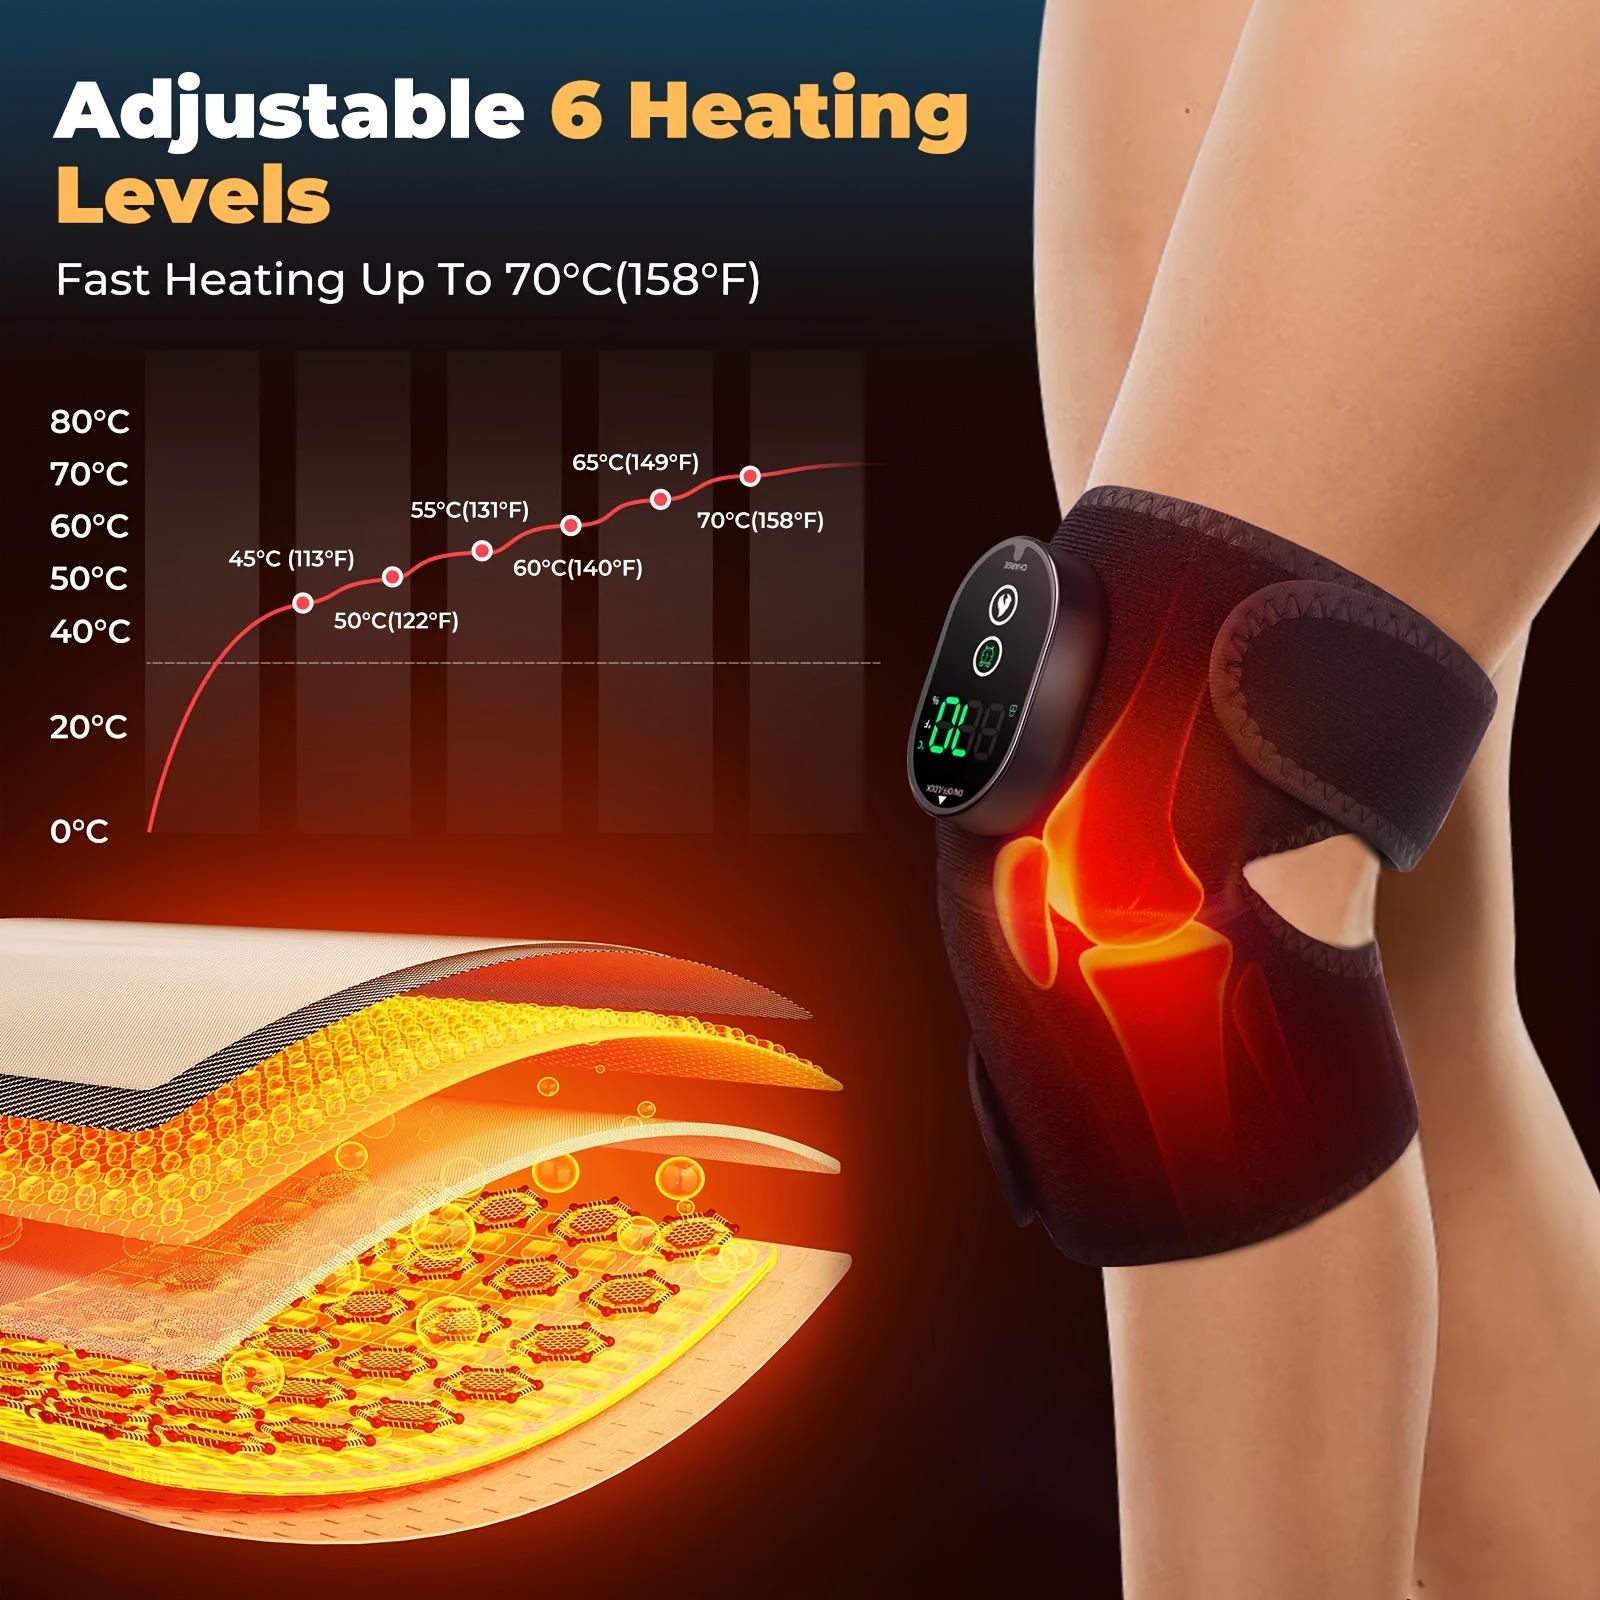 Electric Heating Knee Brace Vibration Massage Physiotherapy - Temu Canada